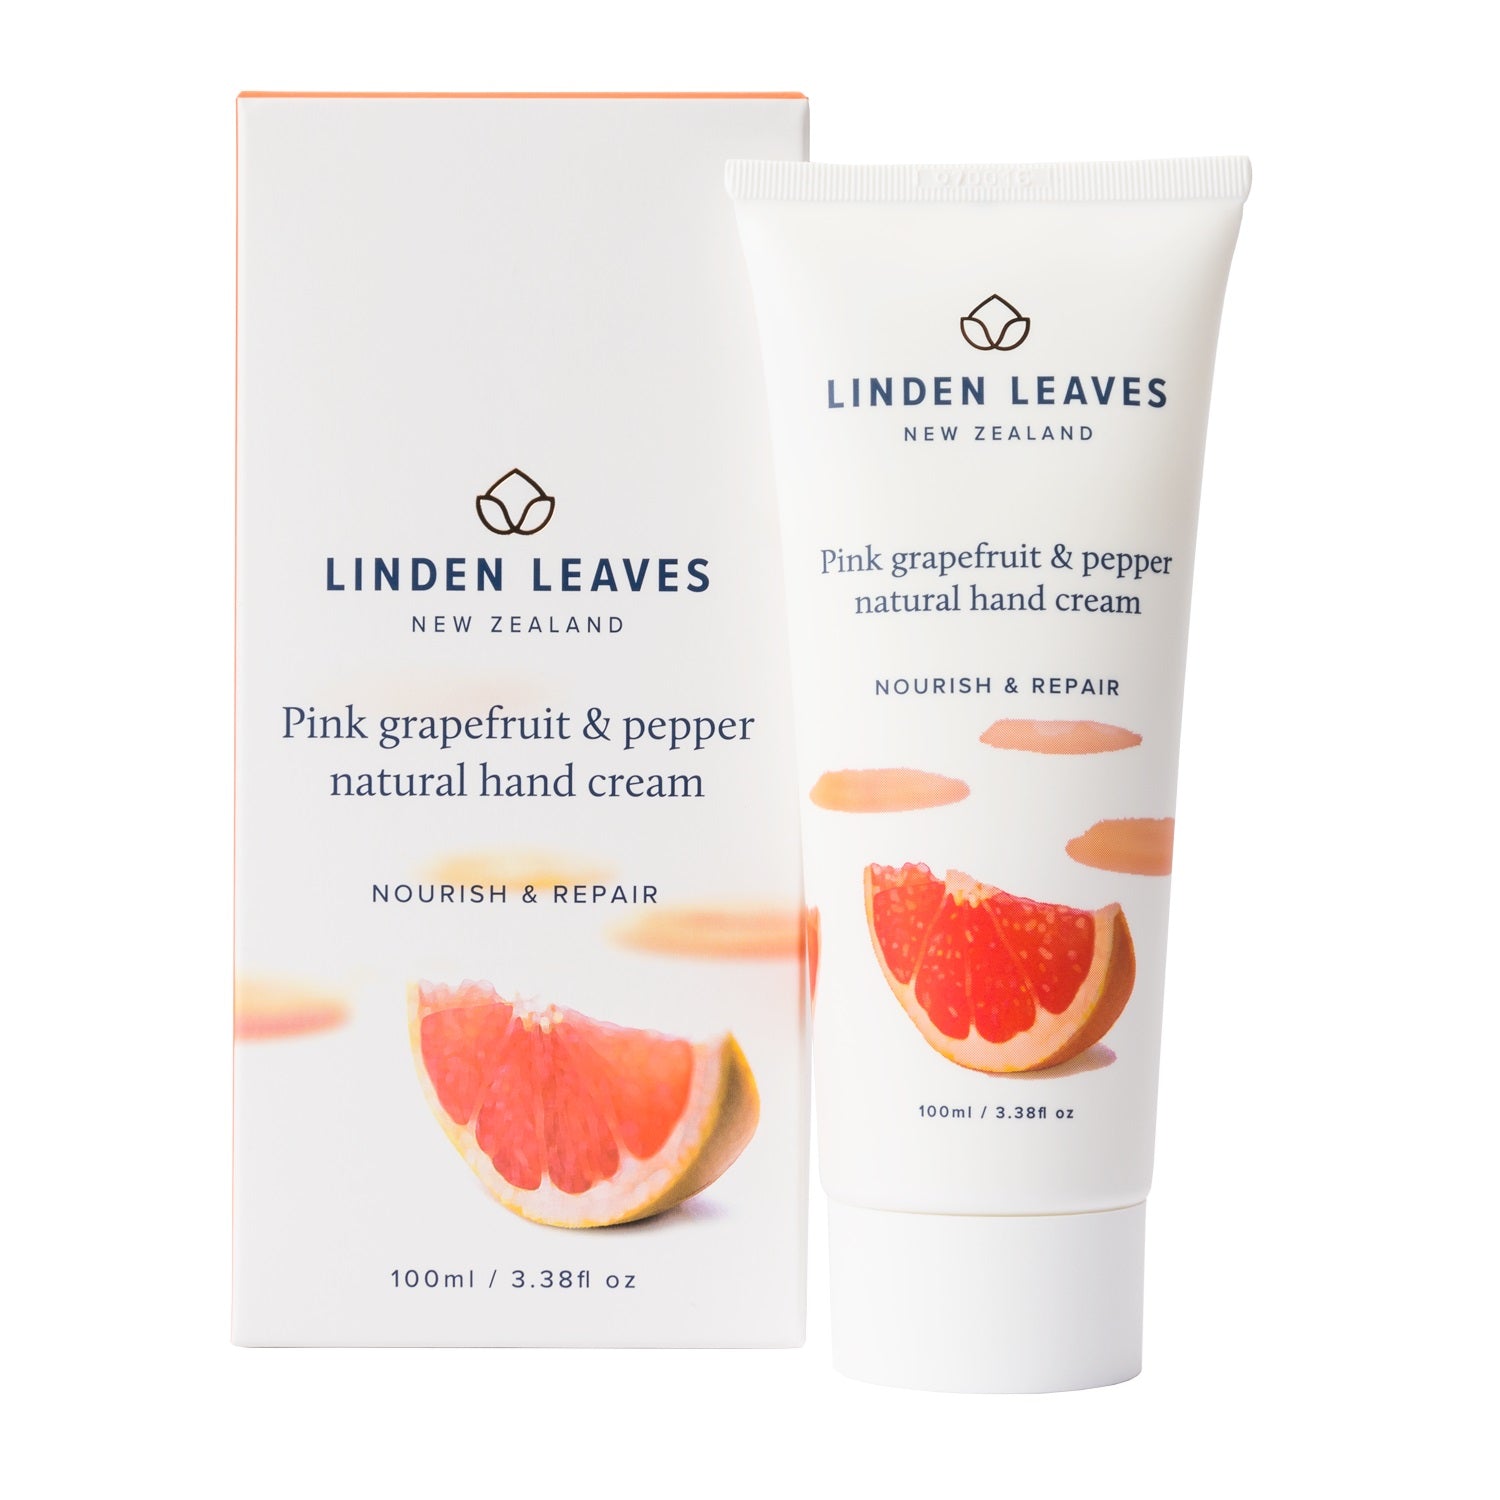 Linden Leaves Pink Grapefruit & Pepper Natural Hand Cream 100ml.